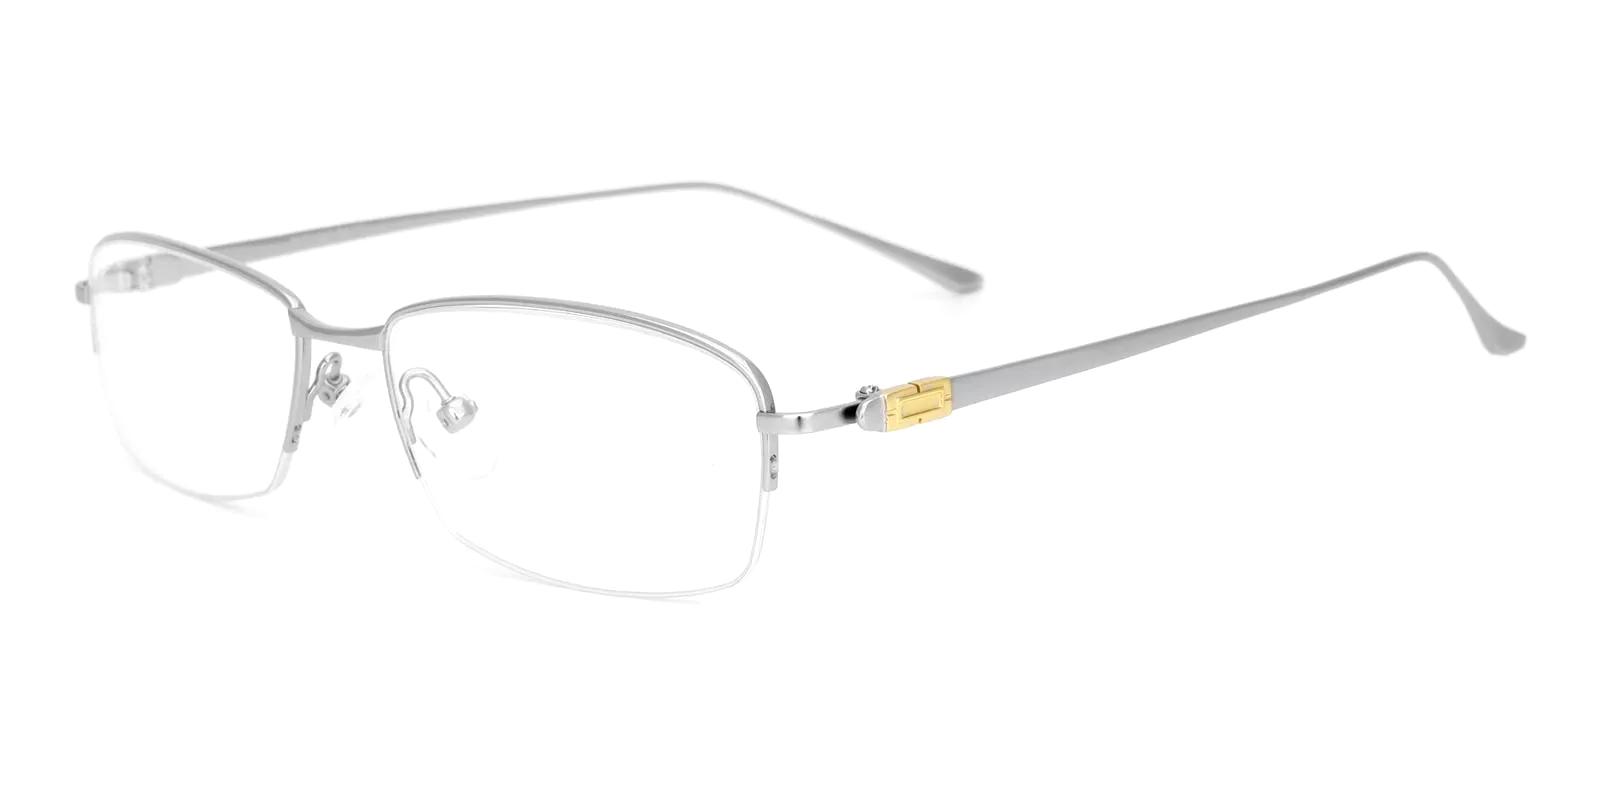 Ploree Silver Titanium Eyeglasses , NosePads Frames from ABBE Glasses